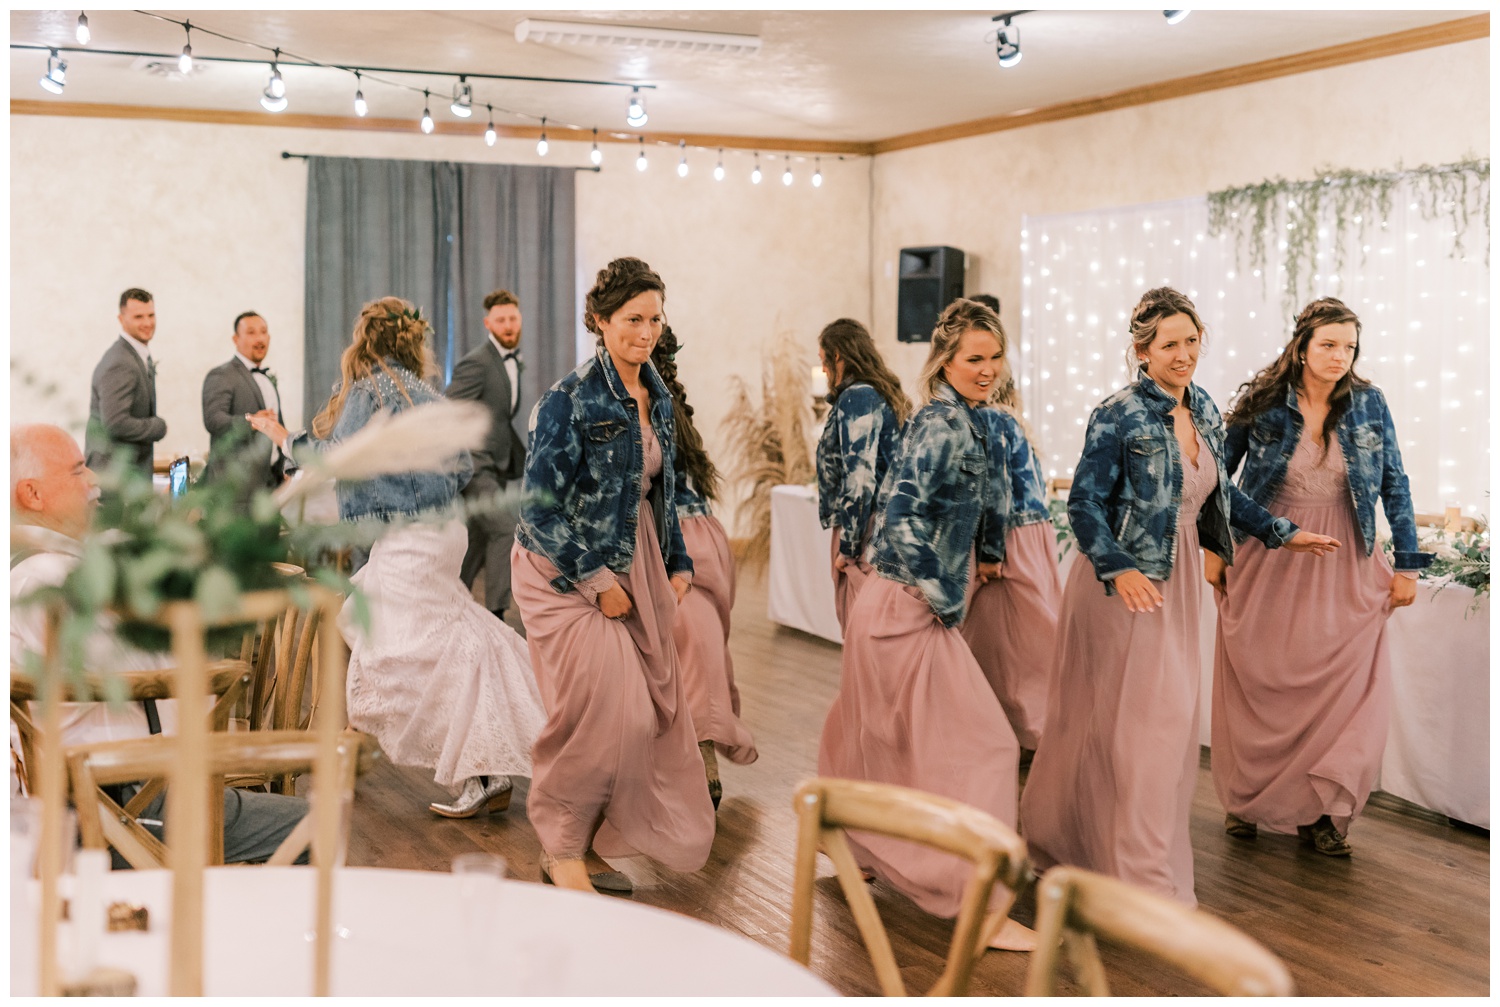 Line dancing at Illinois wedding reception